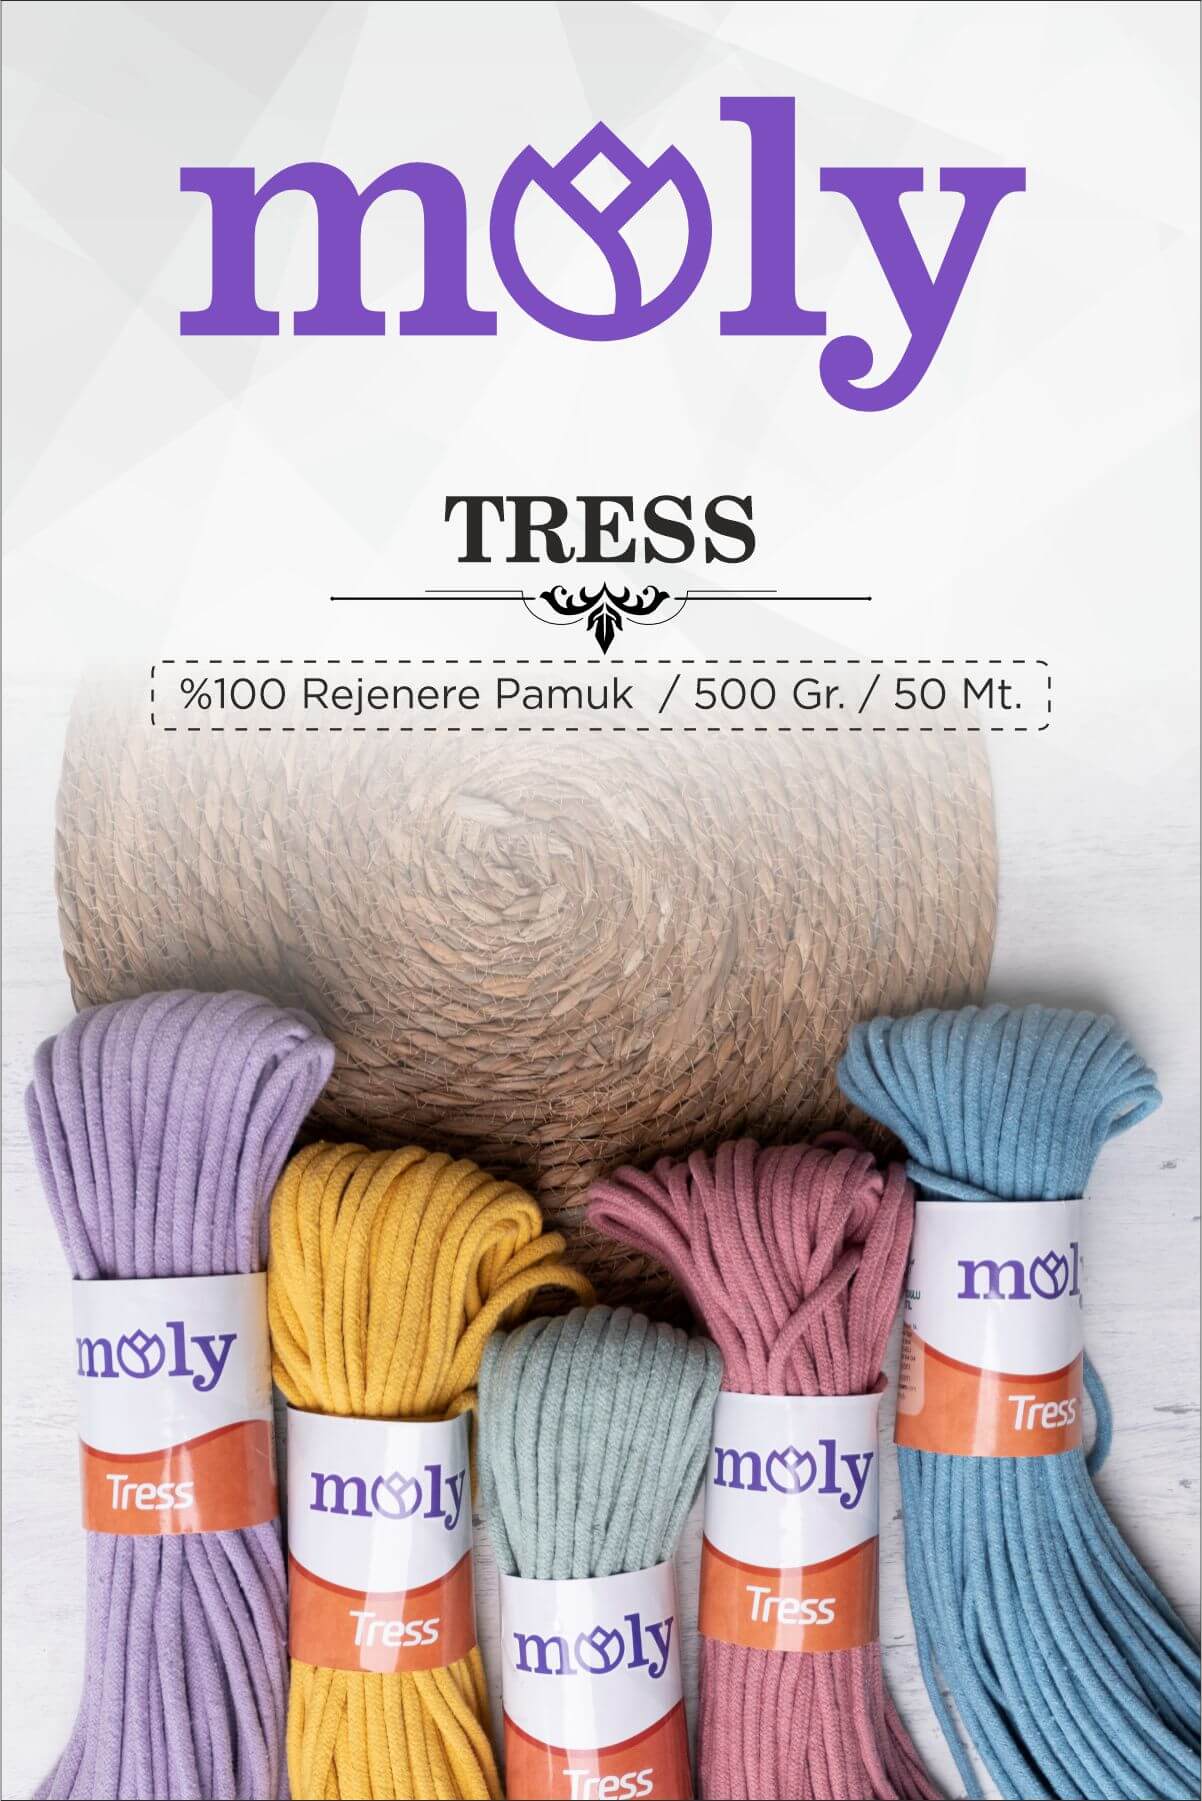 moly-tress-tekstilland